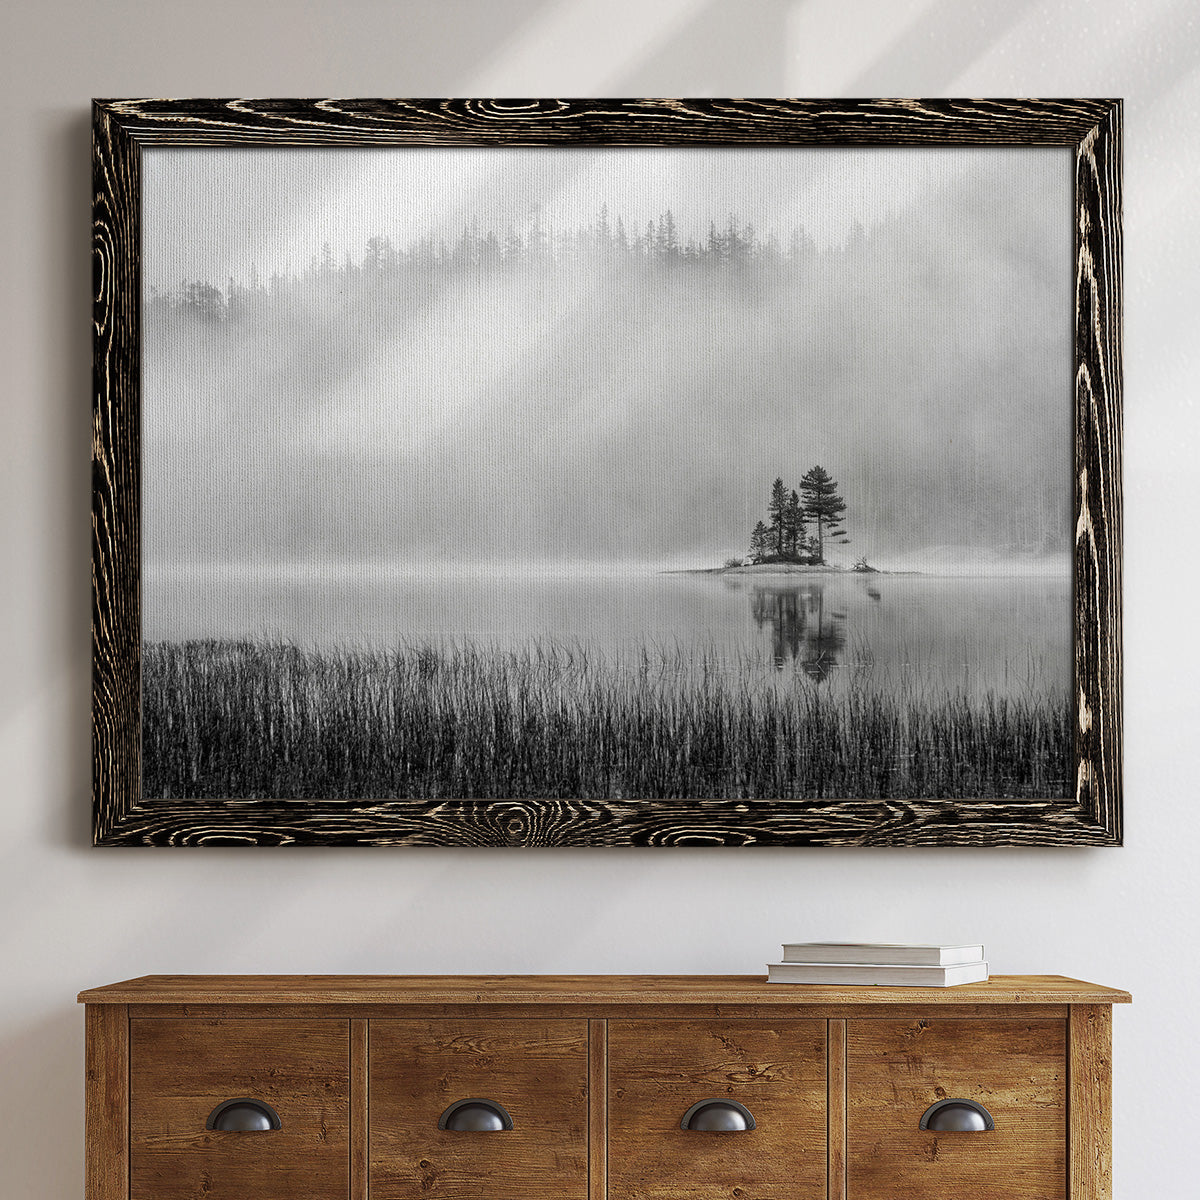 Island Fog-Premium Framed Canvas - Ready to Hang